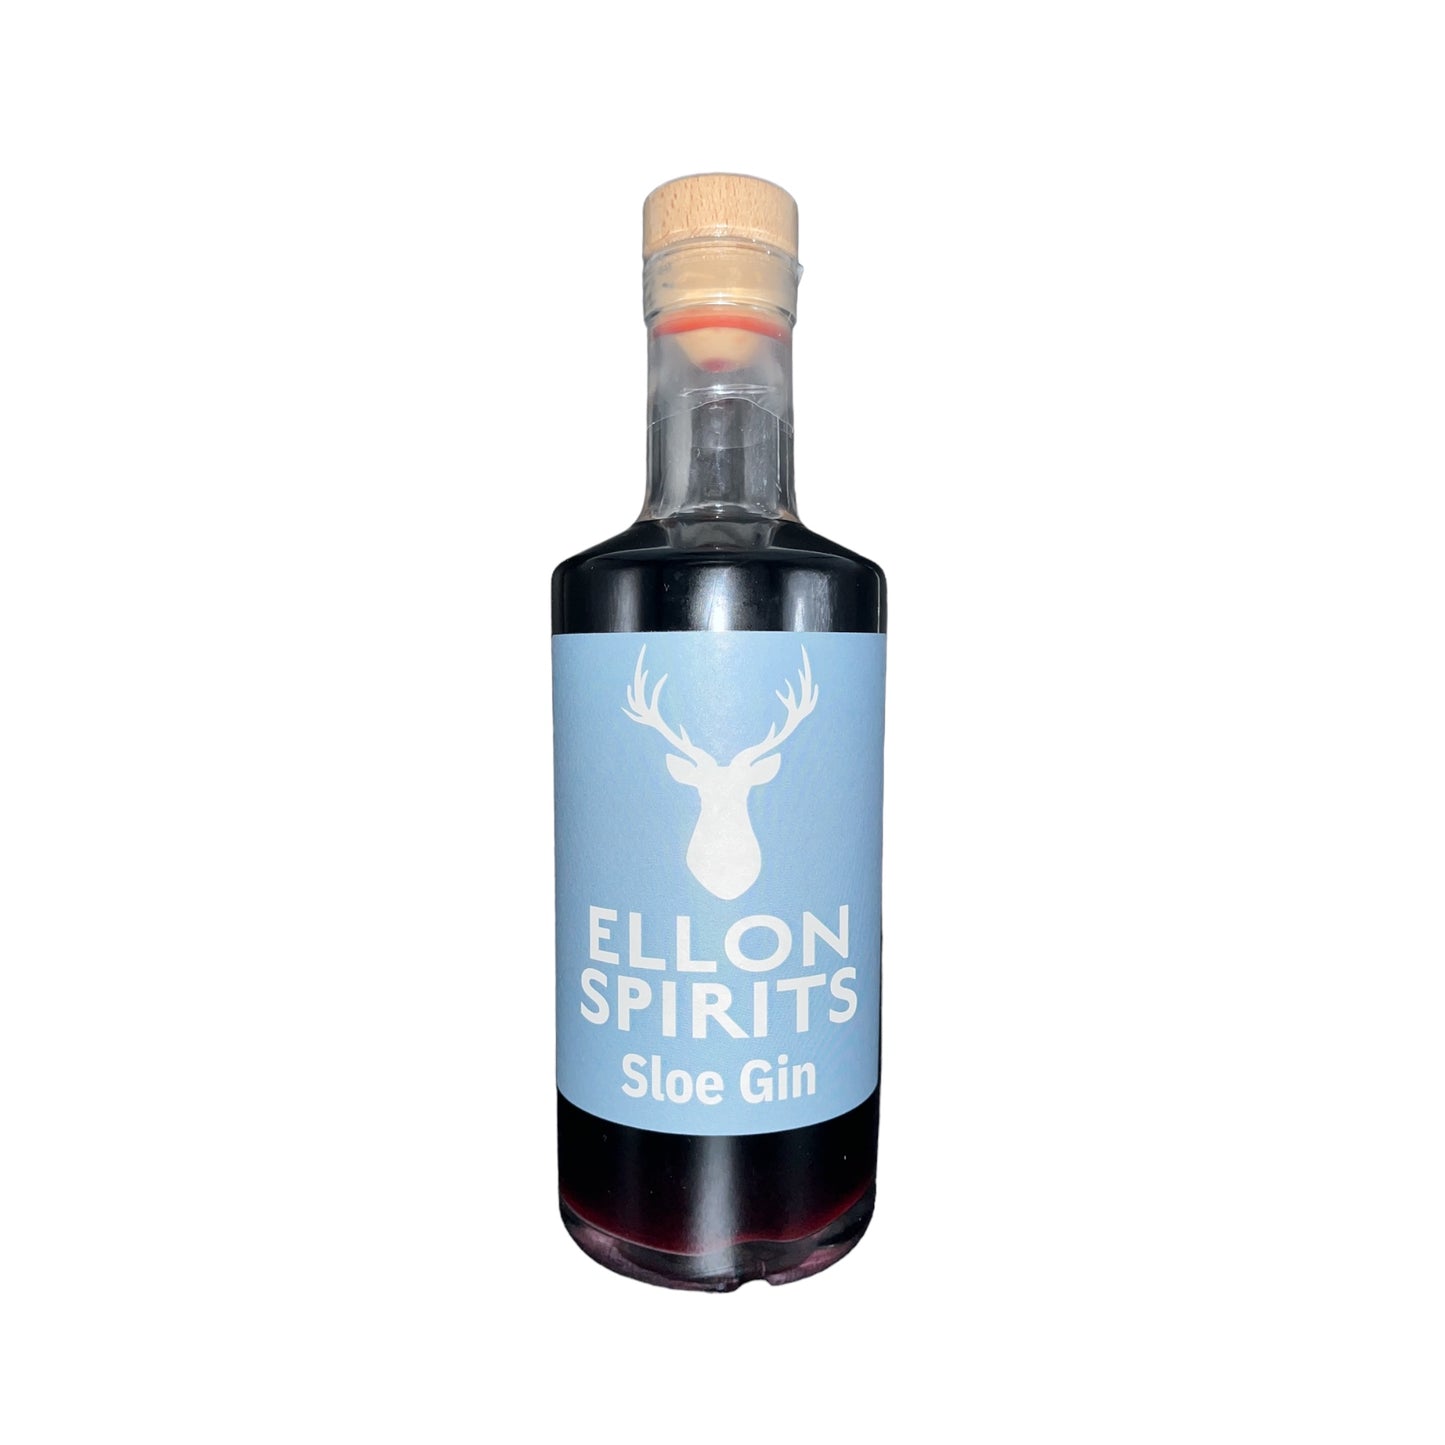 Ellon Spirits Sloe Gin 28% 500ml on white background